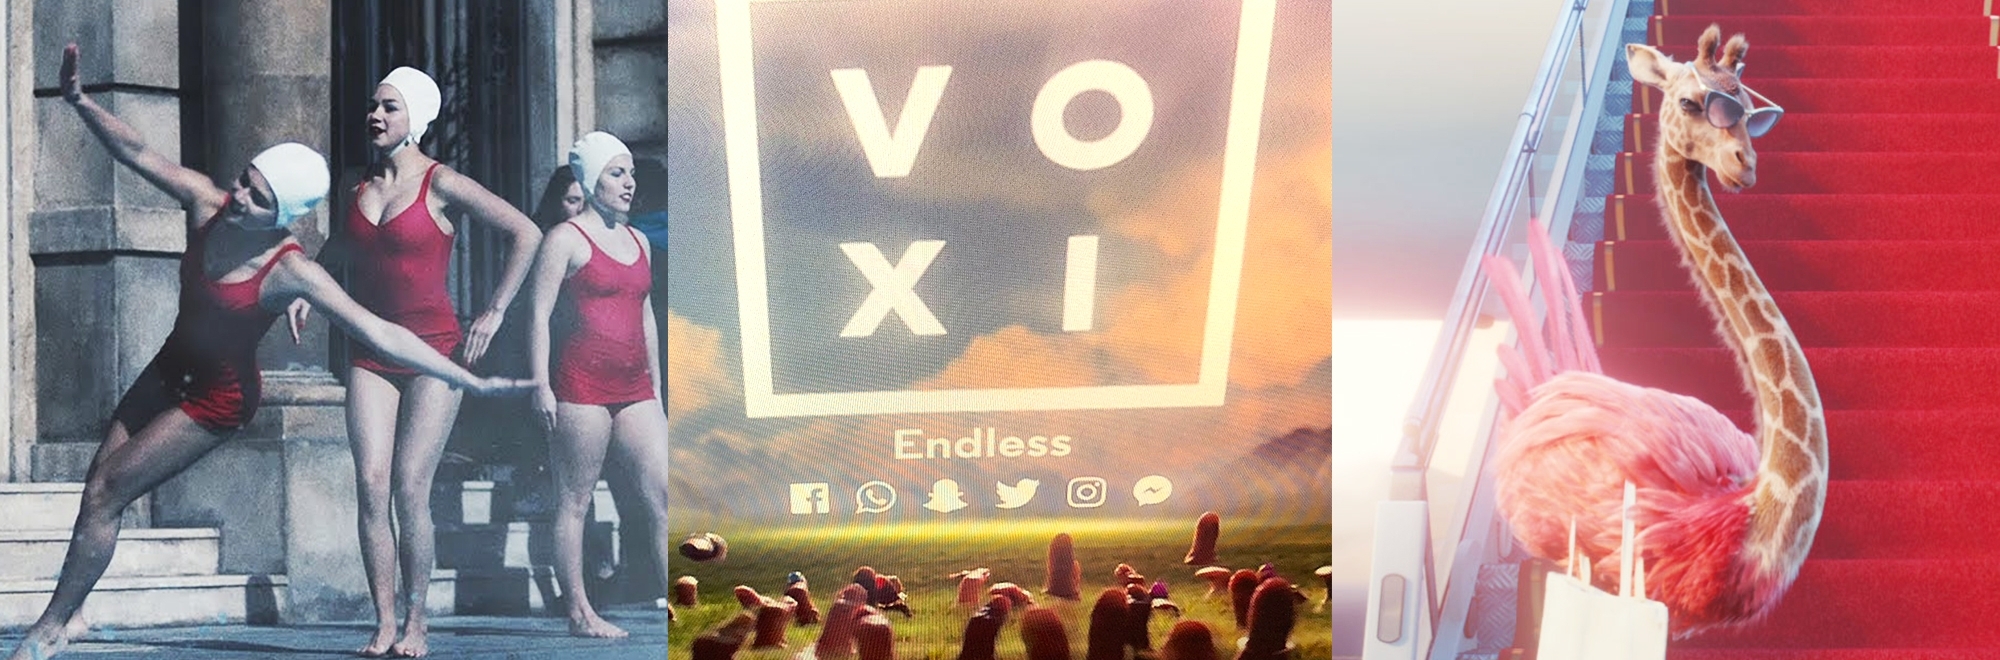 How Vodafone's CGI thumbs looked like penises